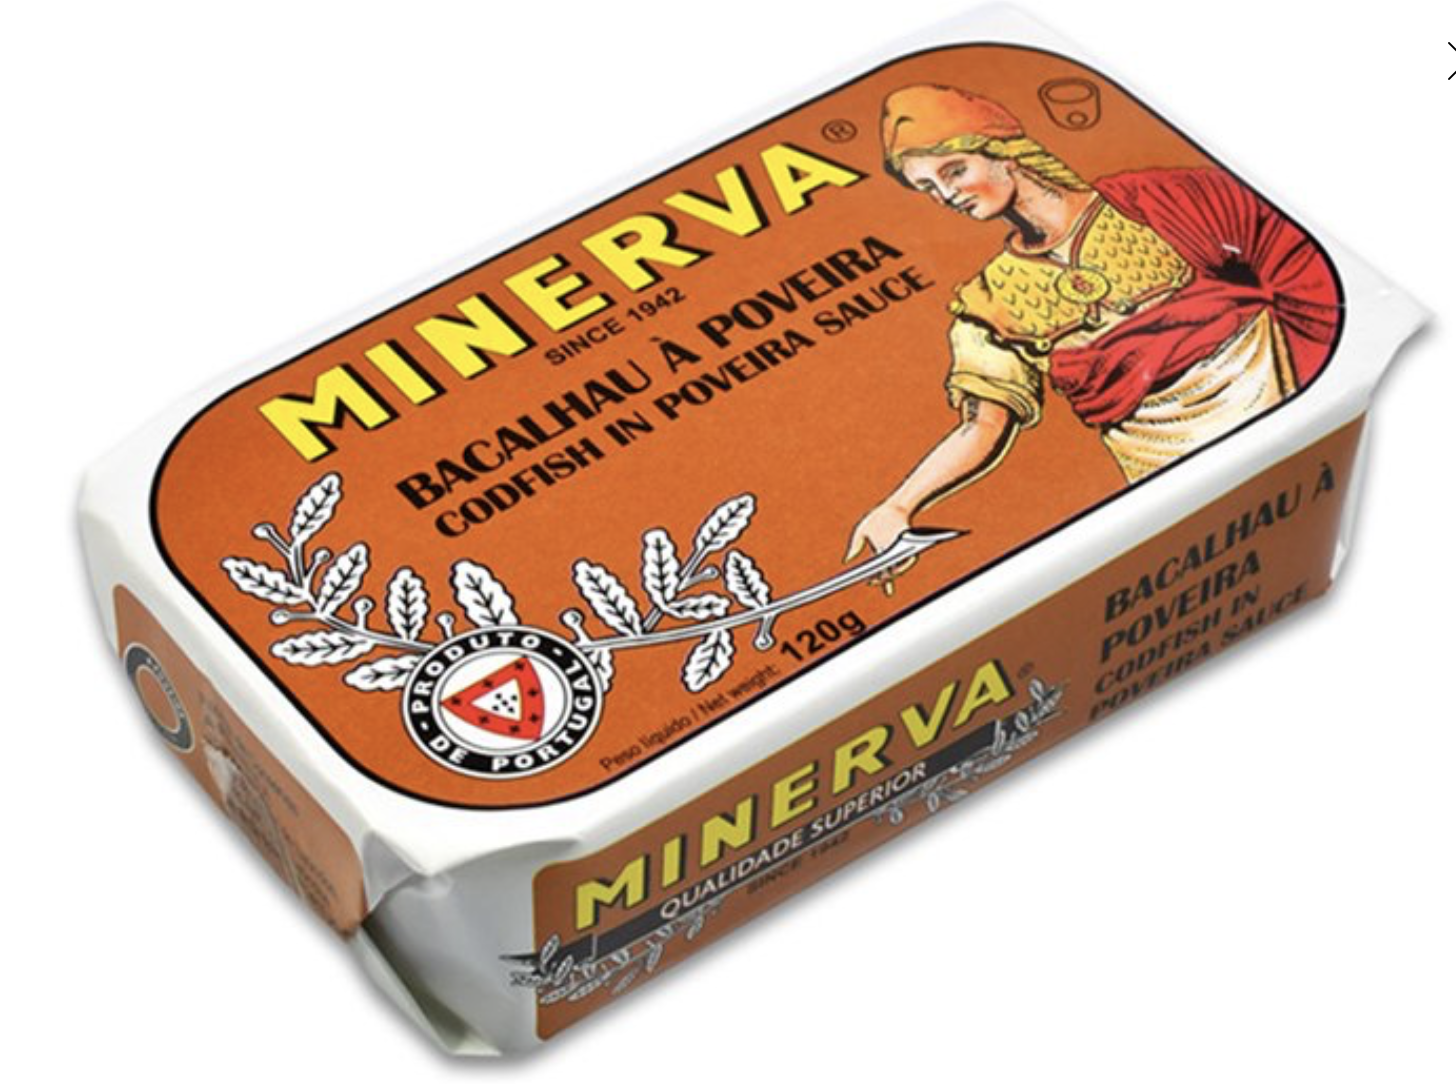 Minerva Codfish/Bacalhau in Poveira Sauce